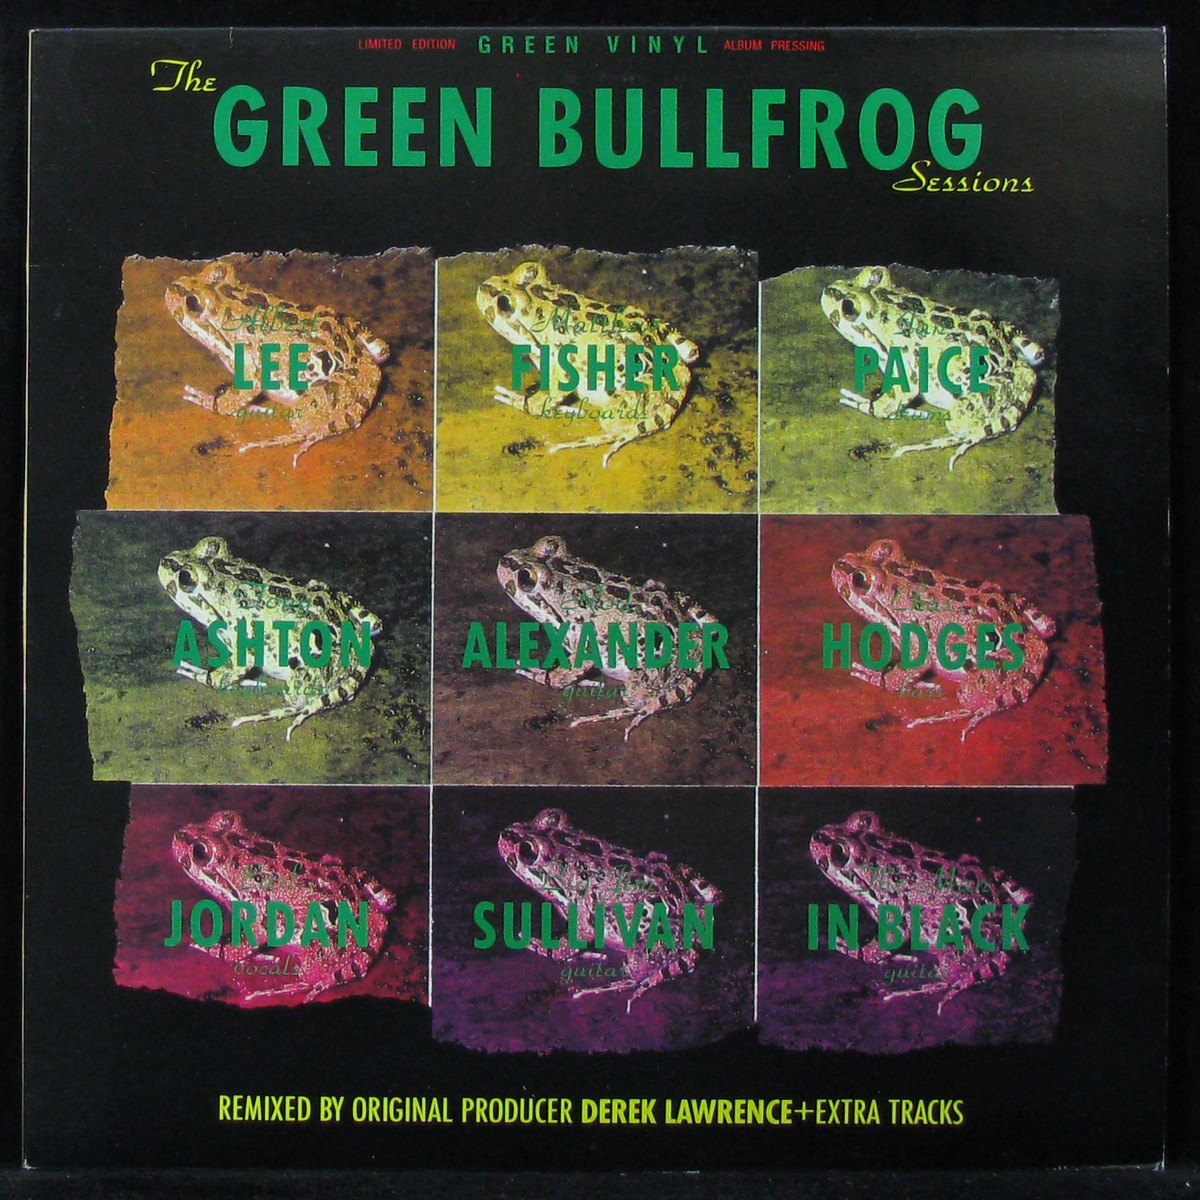 Green Bullfrog Sessions